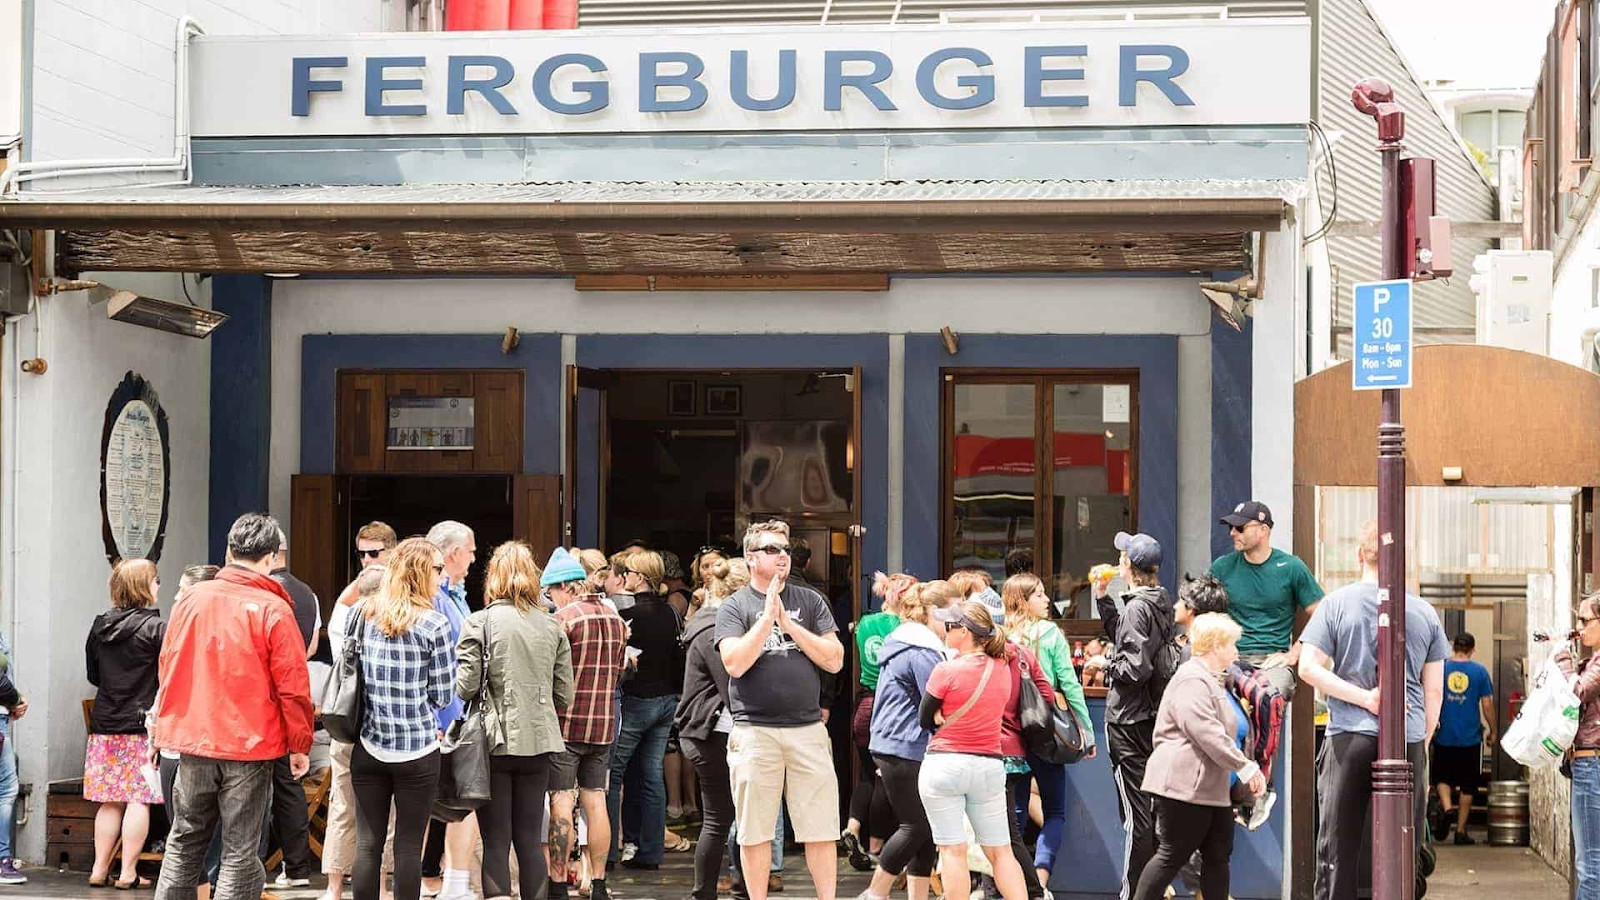 Join the Devil Burger vs. FergBurger debate in Queenstown